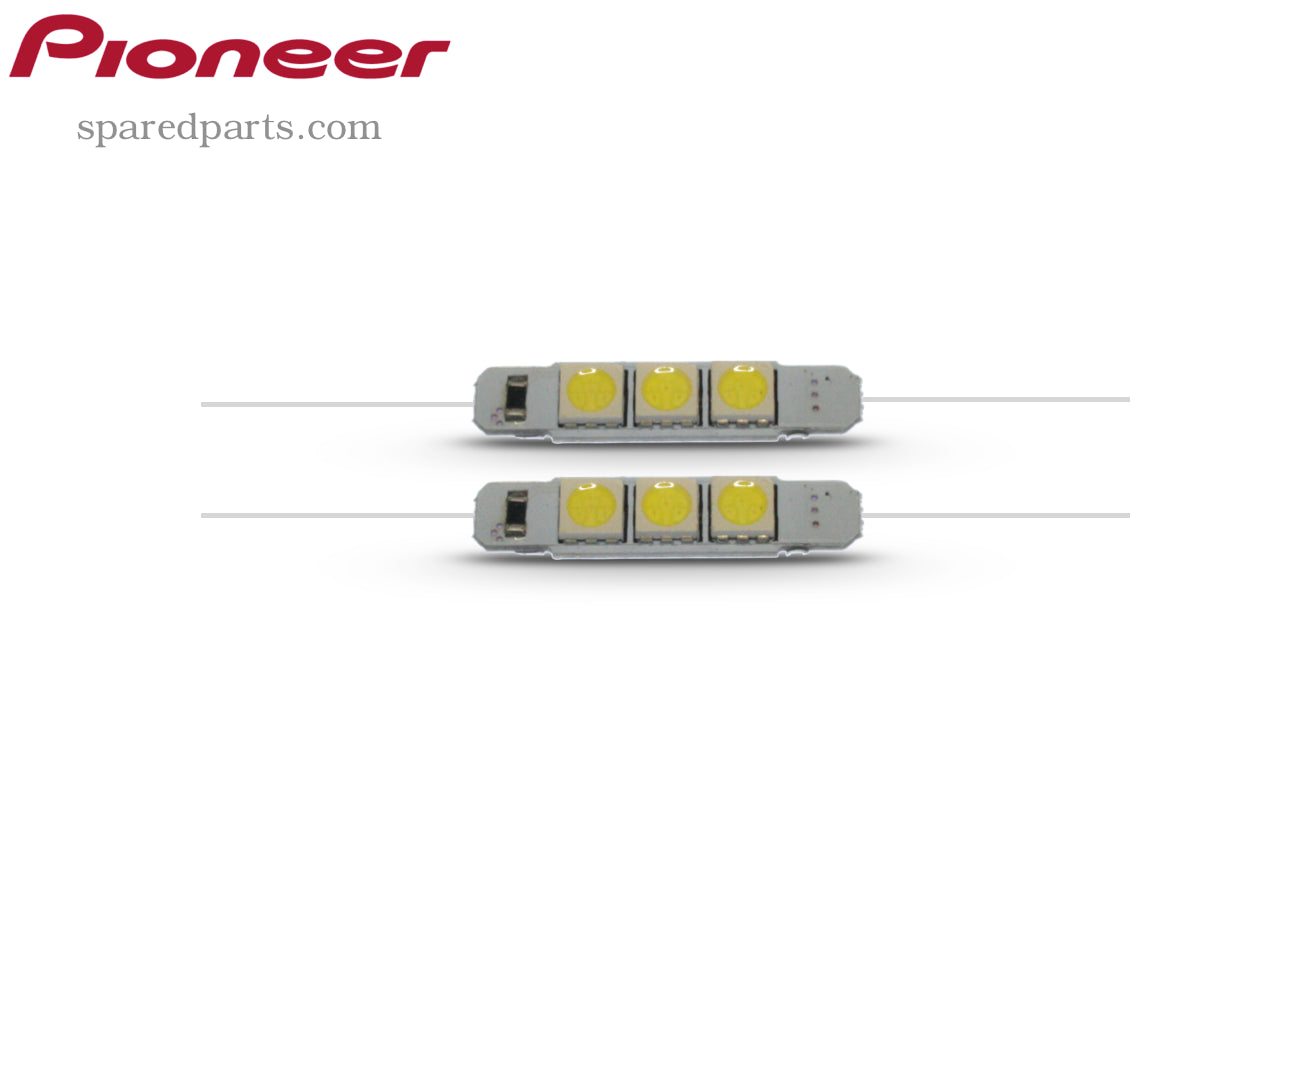 Pioneer CT-F1000 Meter Lamps (LED Upgrade)